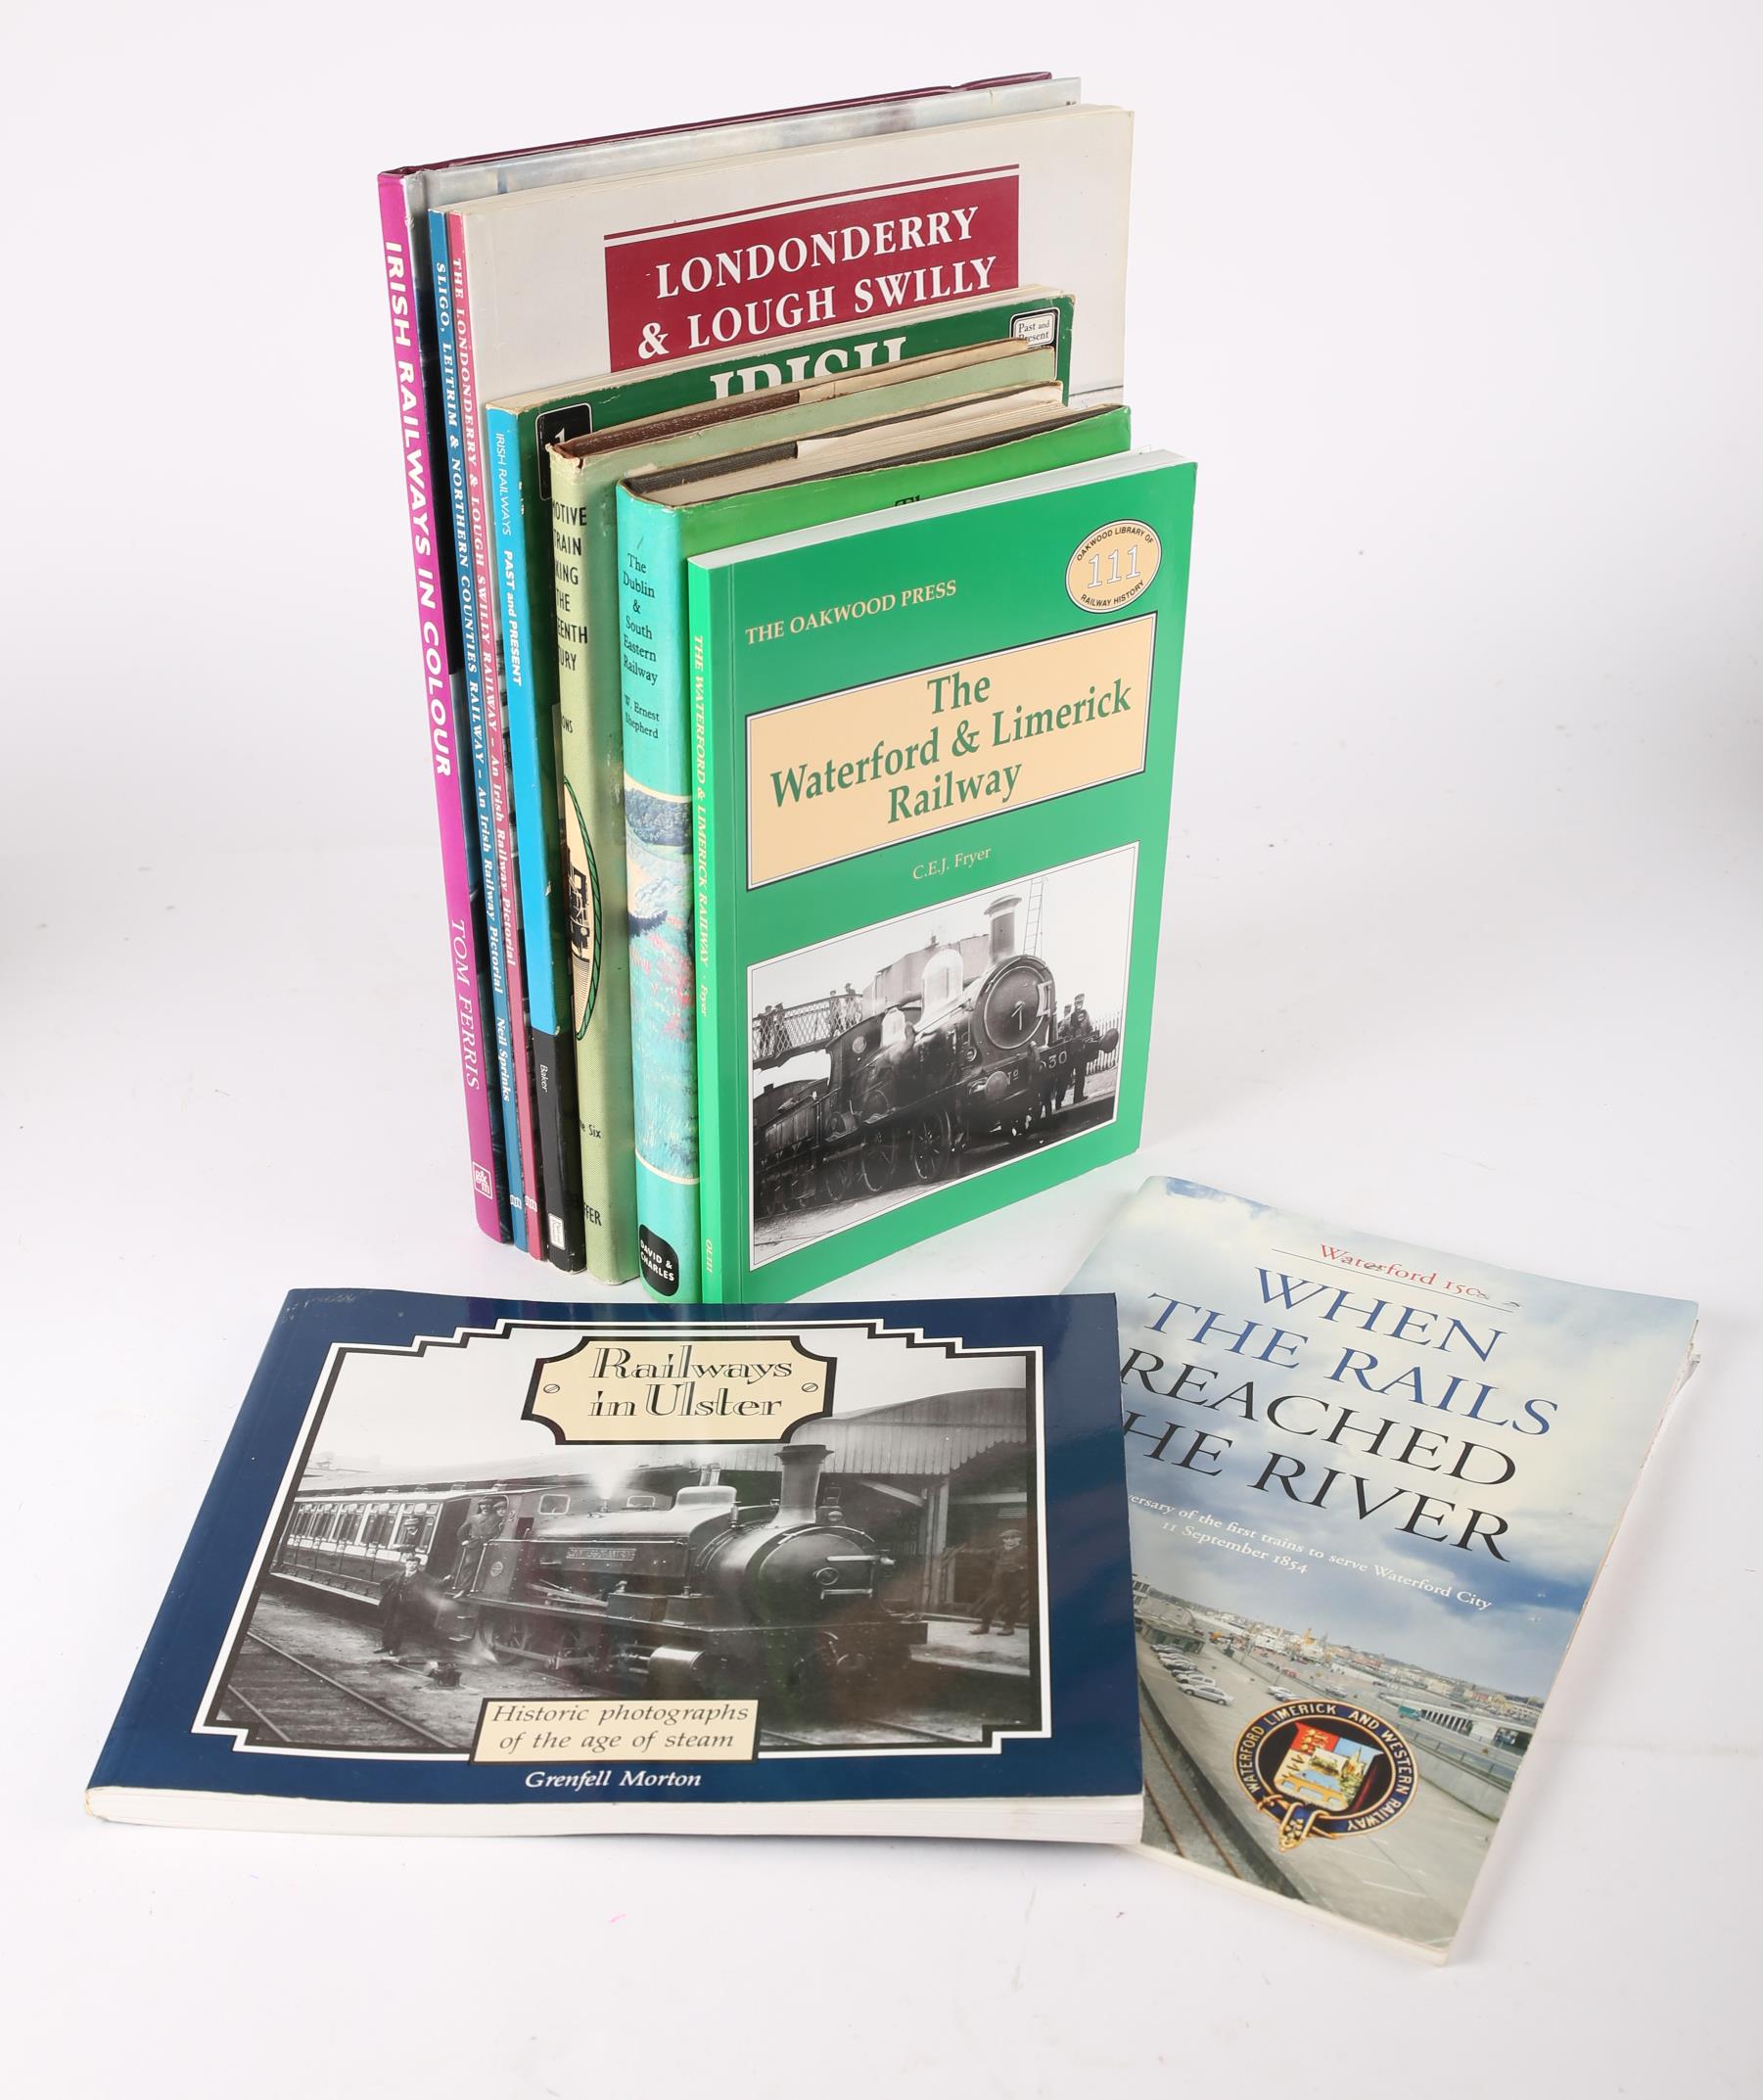 Irish railways. A collection of nine books on Irish railways. Ahrons, EL. Locomotive and Train